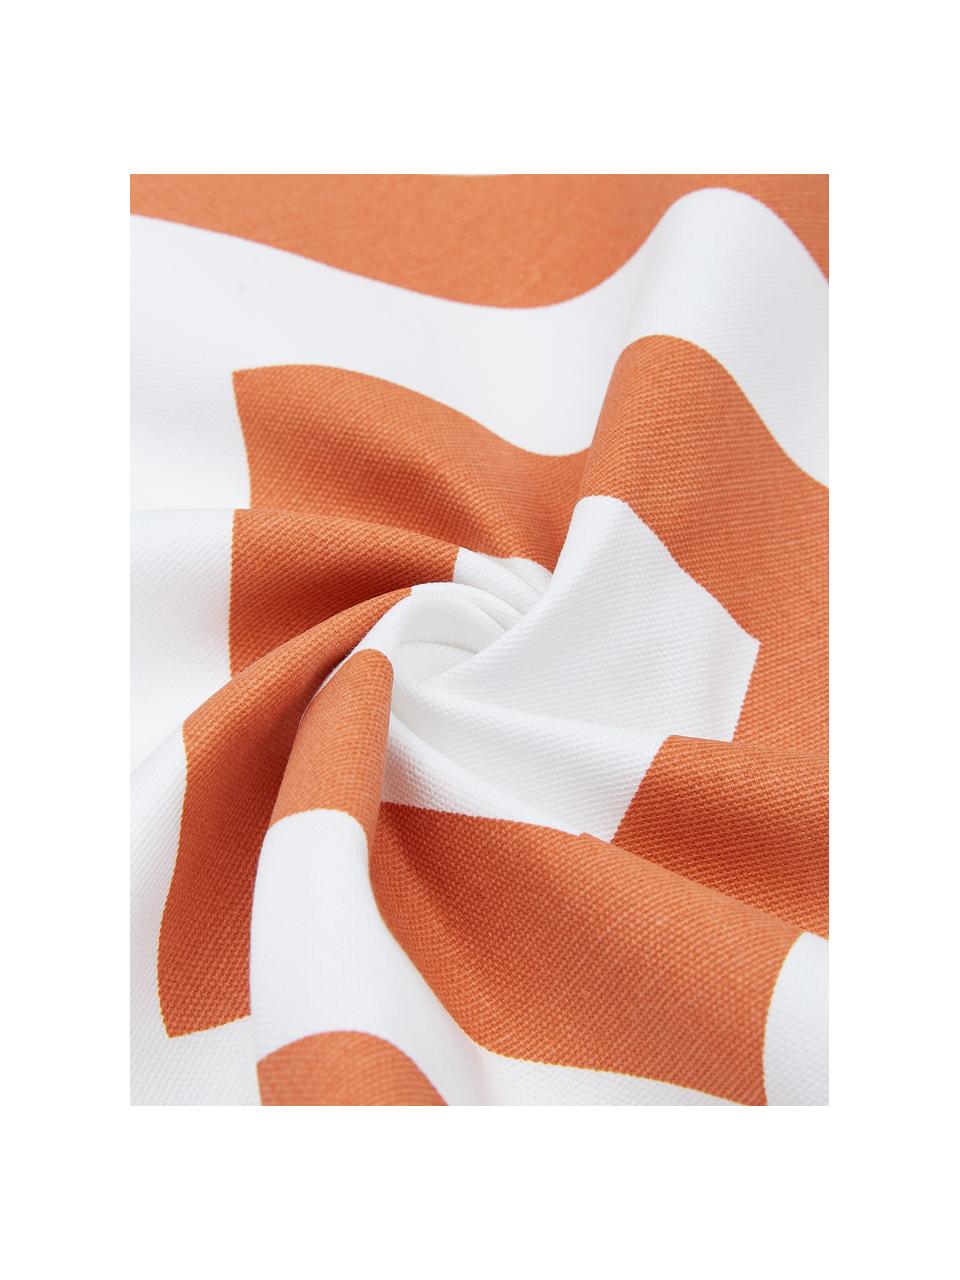 Kussenhoes Sera in oranje/wit met grafisch patroon, 100% katoen, Wit, oranje, B 45 x L 45 cm